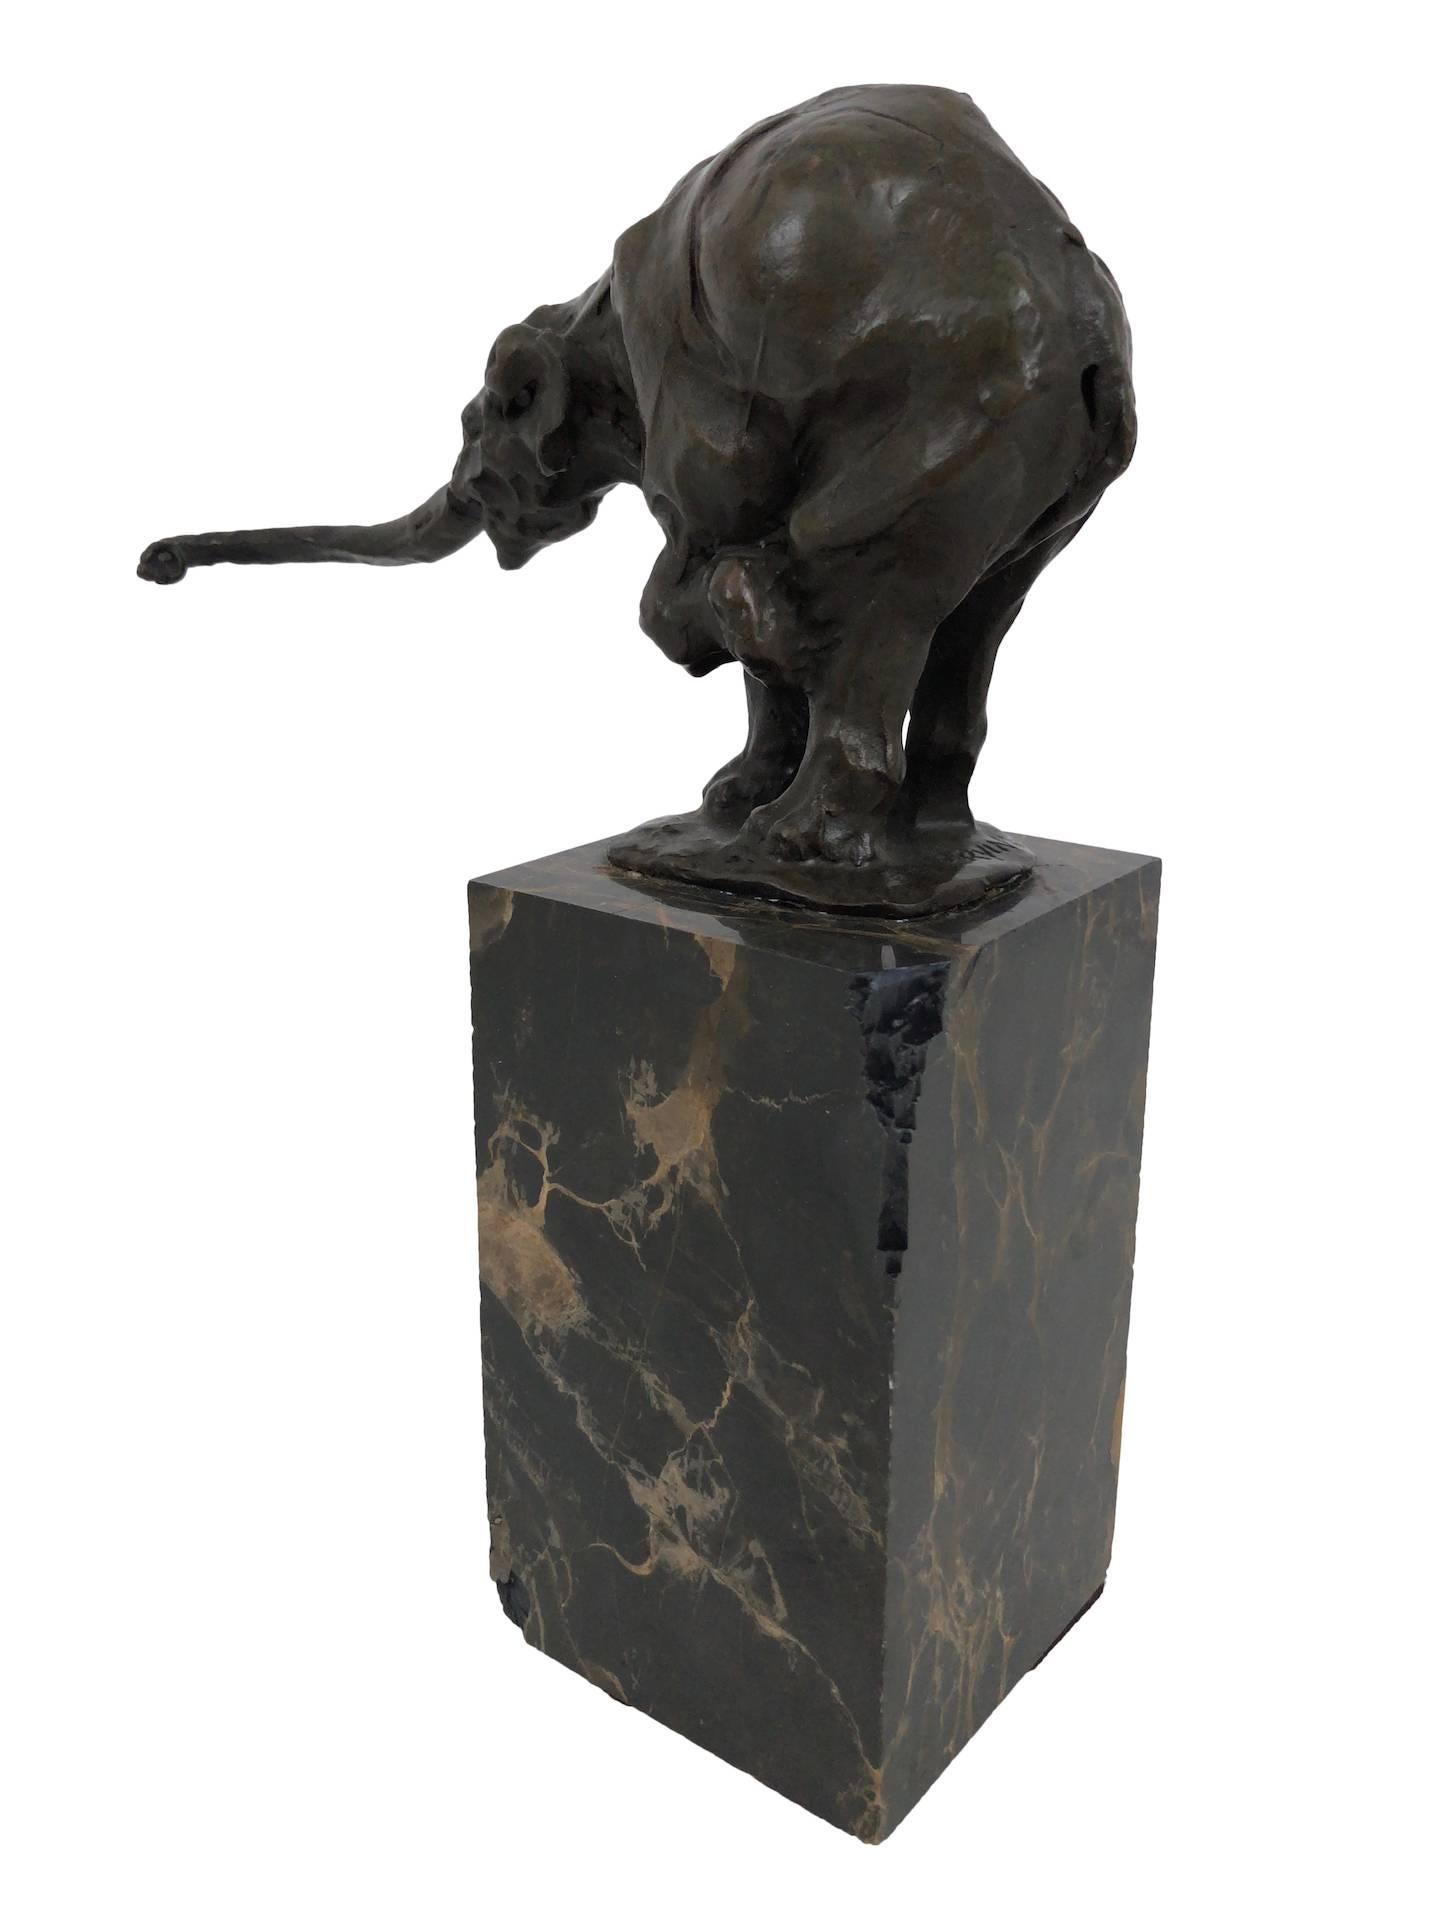 Bronze sculpture Elephant by Louis-Albert Carvin (1875-1951)
Original Art Deco, France, 1930s.
Signed: Carvin
Marble-socle.

Dimensions:
Width 7 cm
Height 22.5 cm
Depth 17 cm.